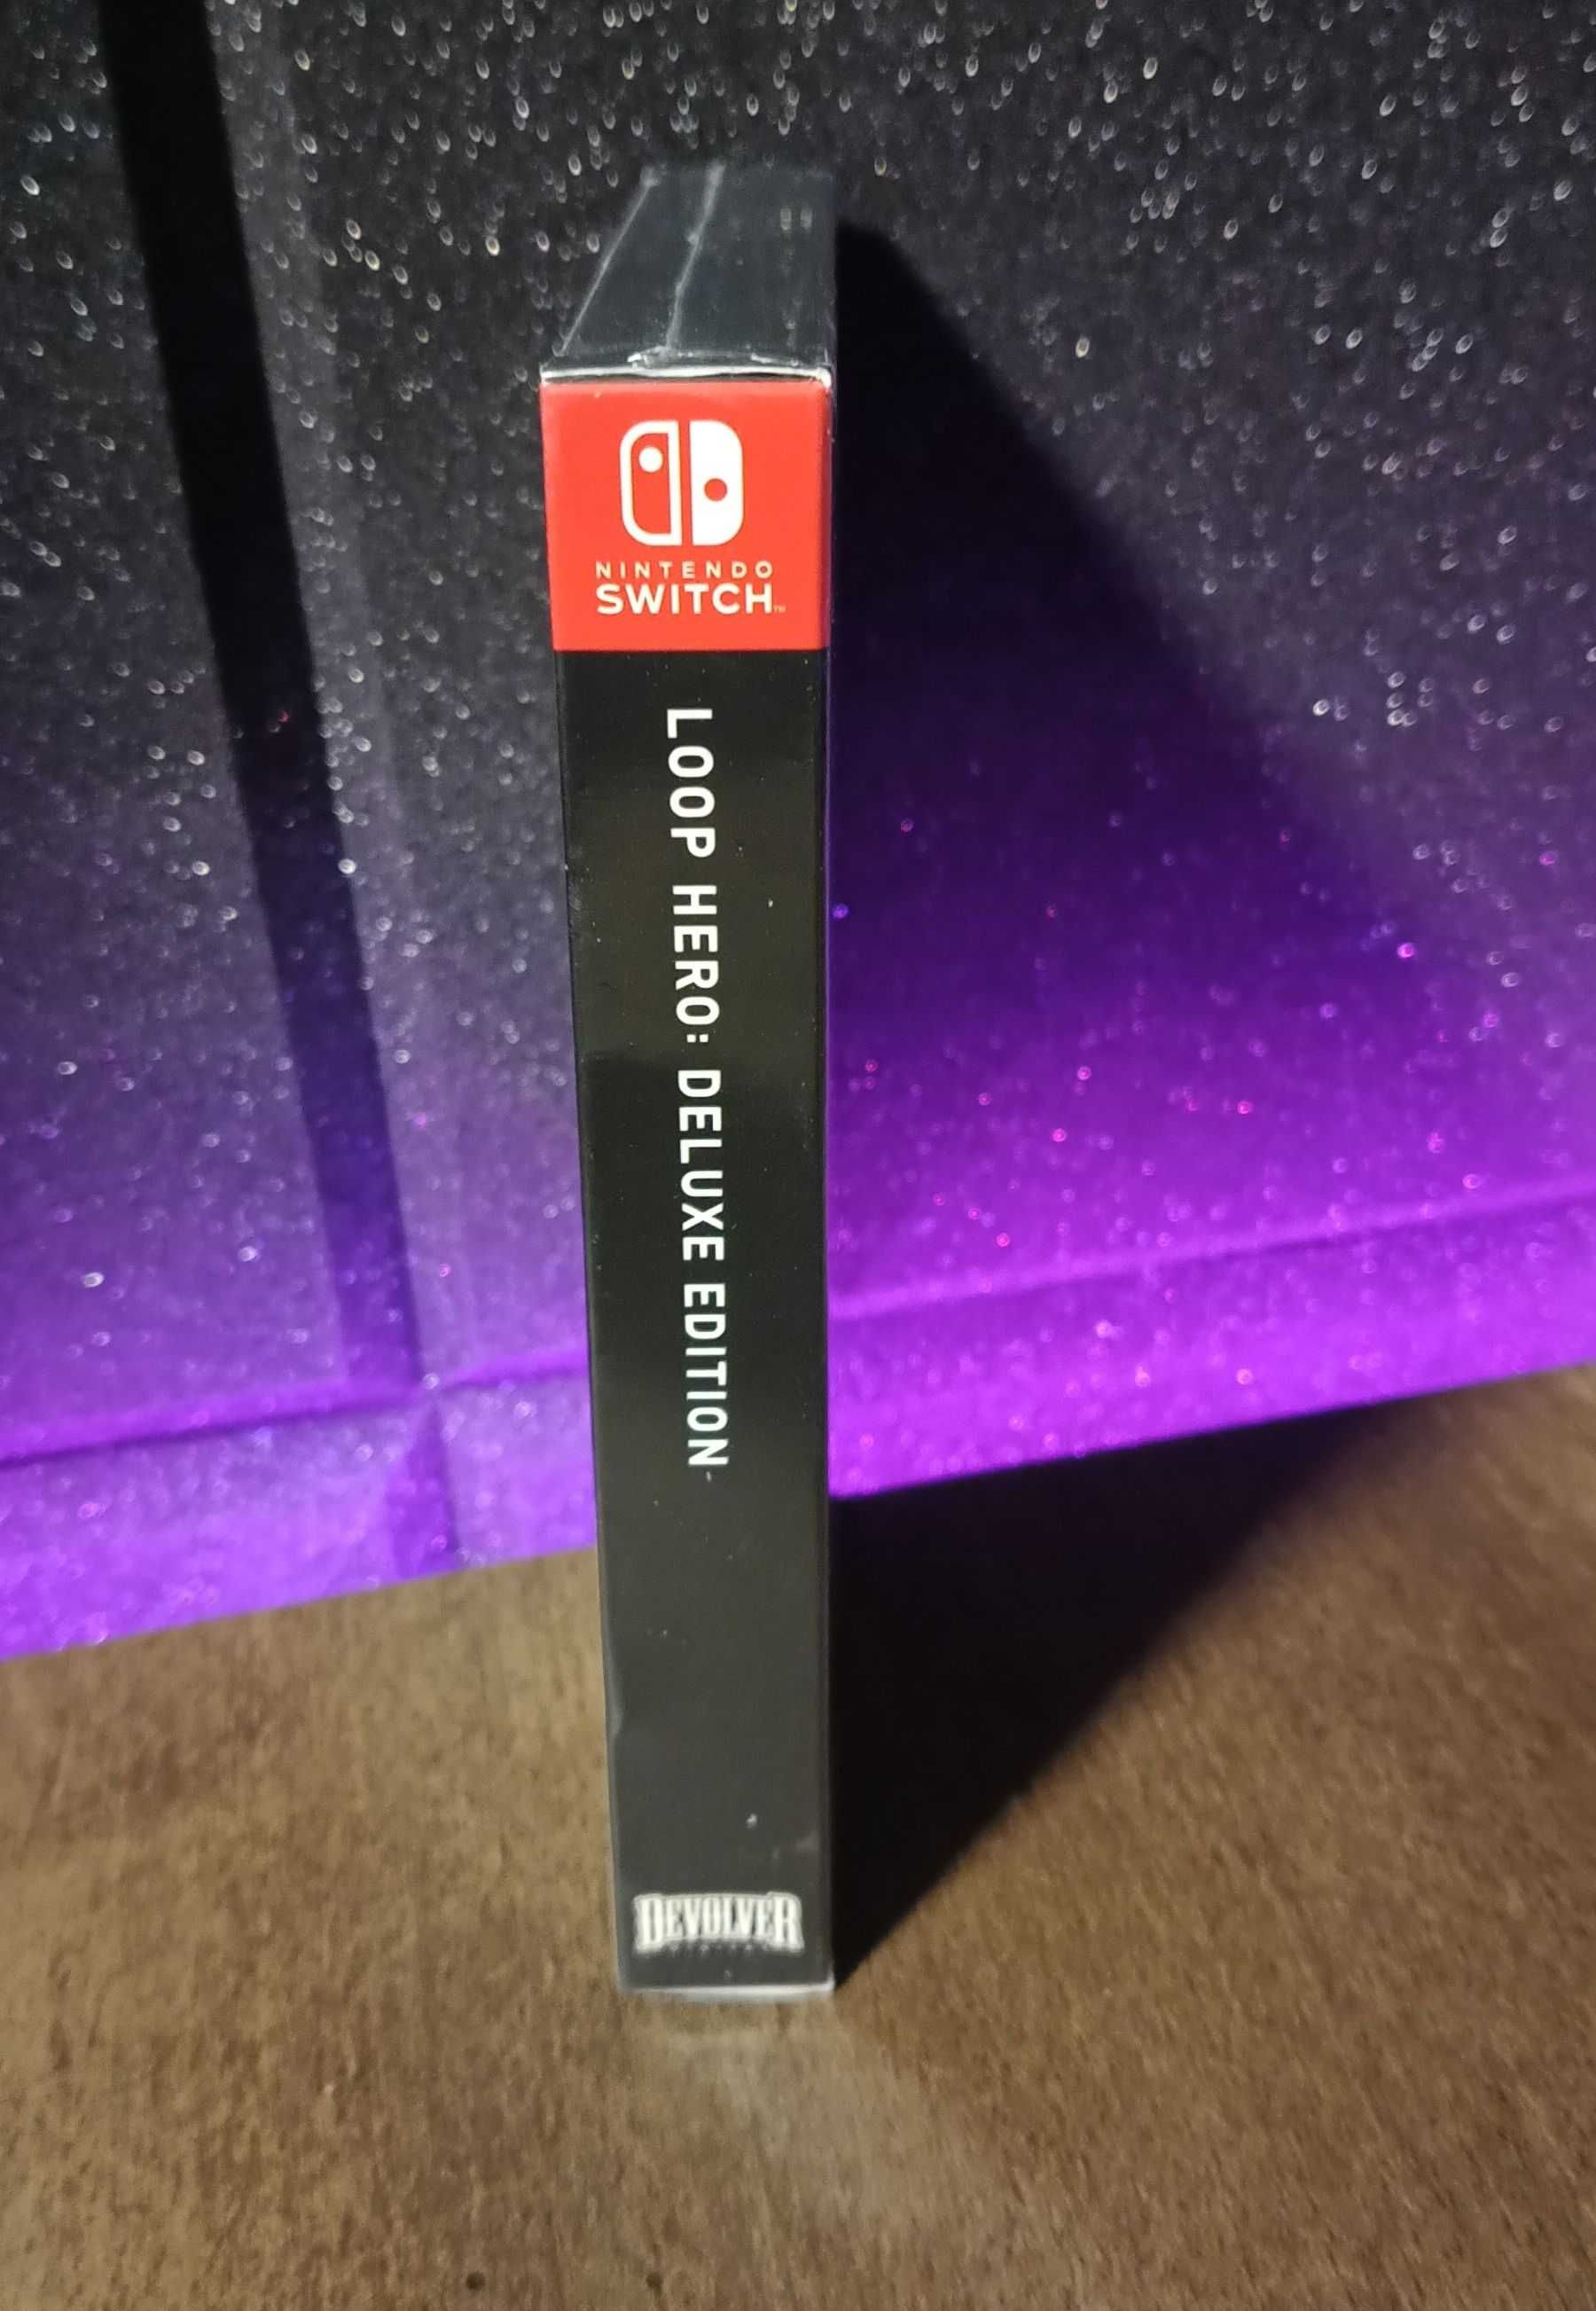 Loop Hero Deluxe Edition Nintendo Switch super edycja, dungeon crawler